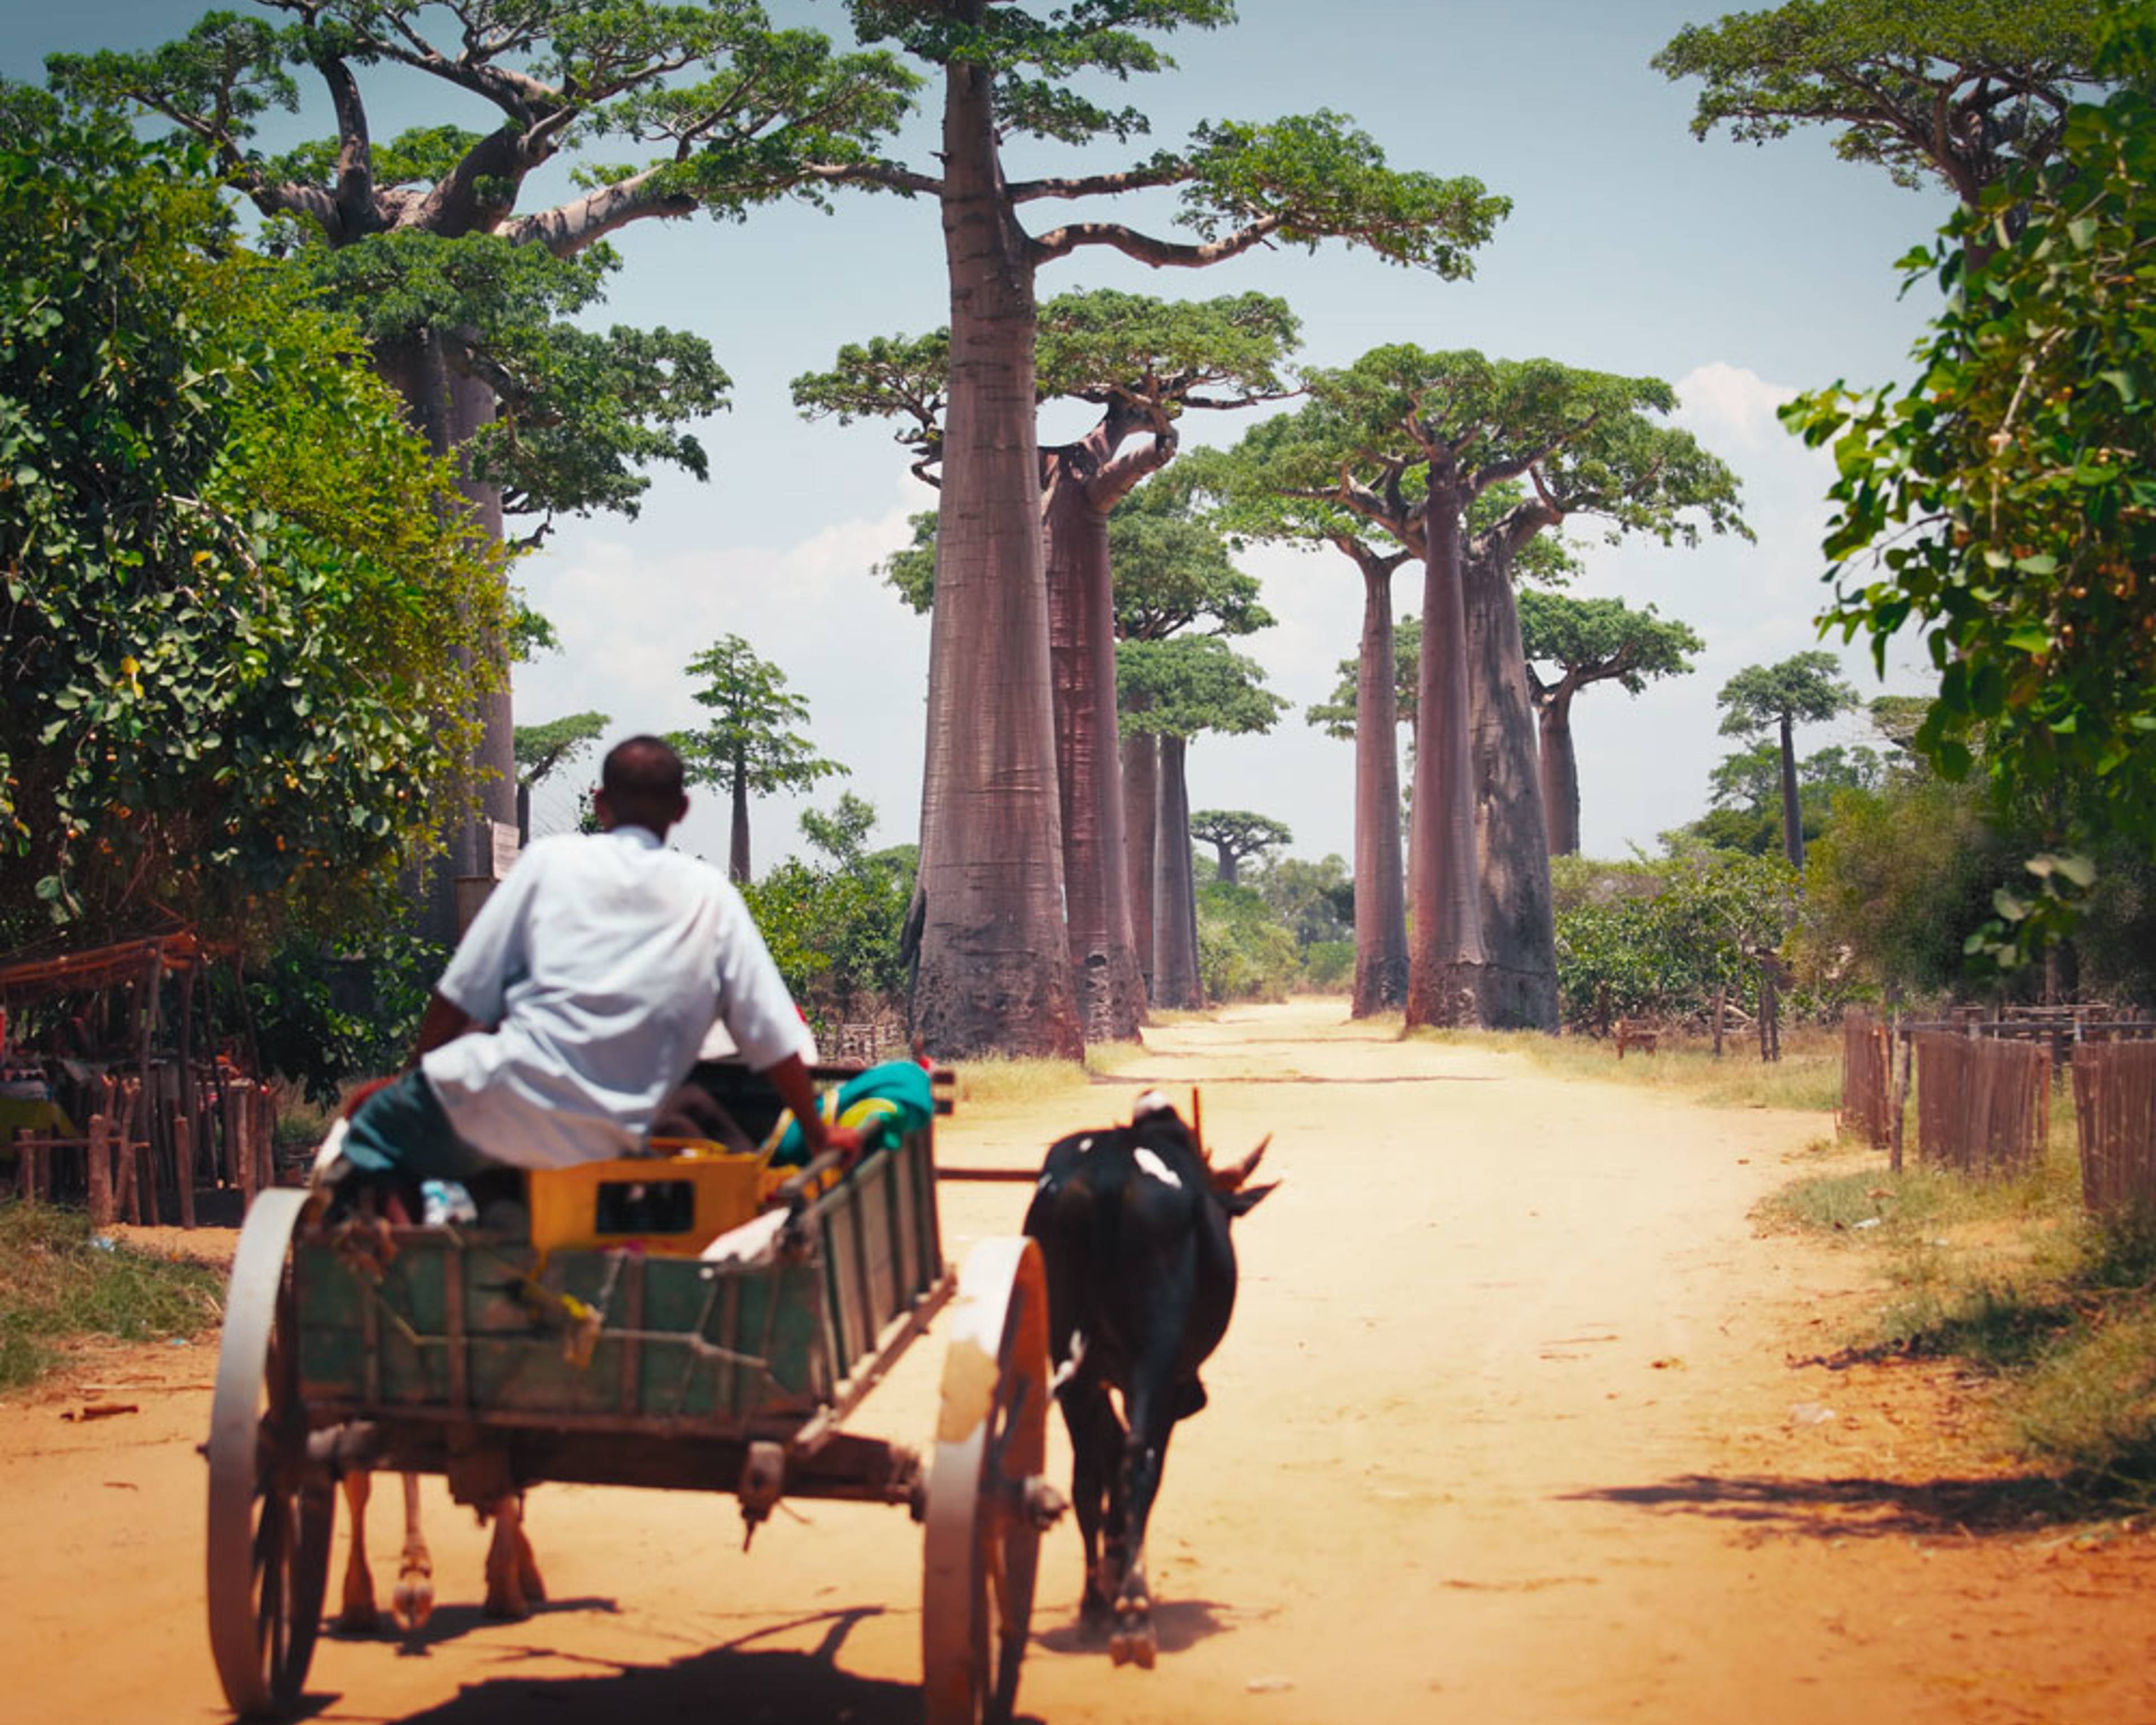 Natururlaub Madagaskar - Individualreise buchen